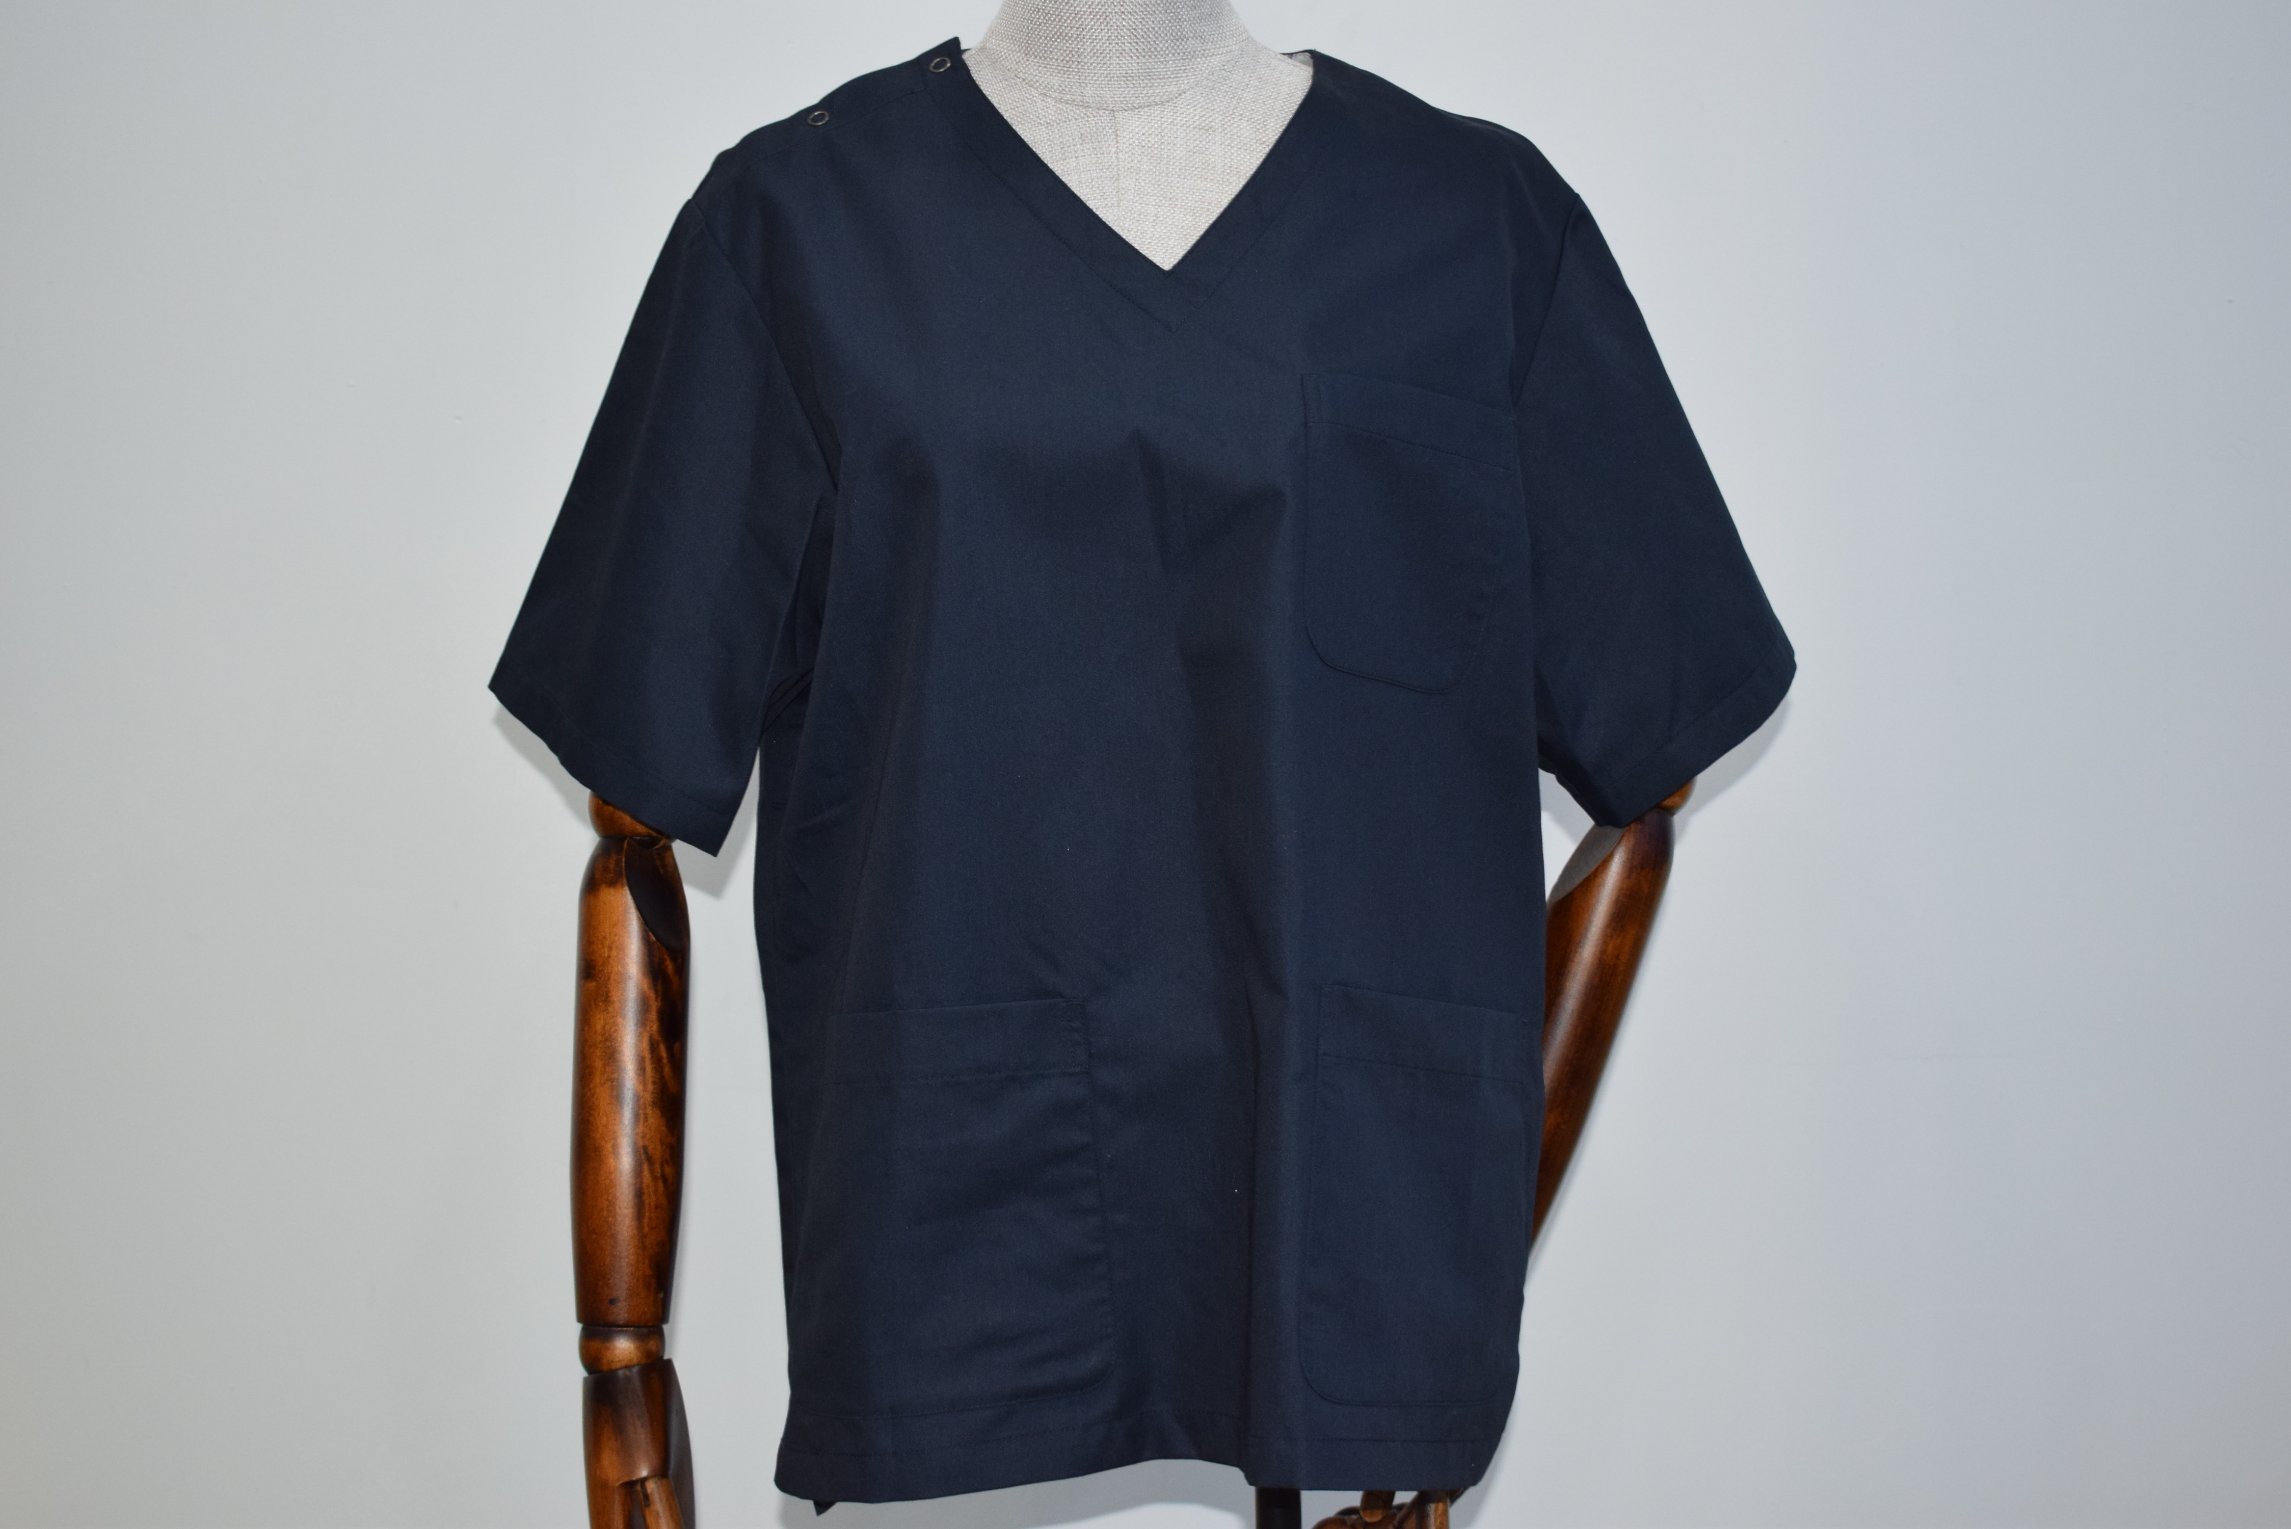 Hot Sale Black Hospital Uniform for Surgery